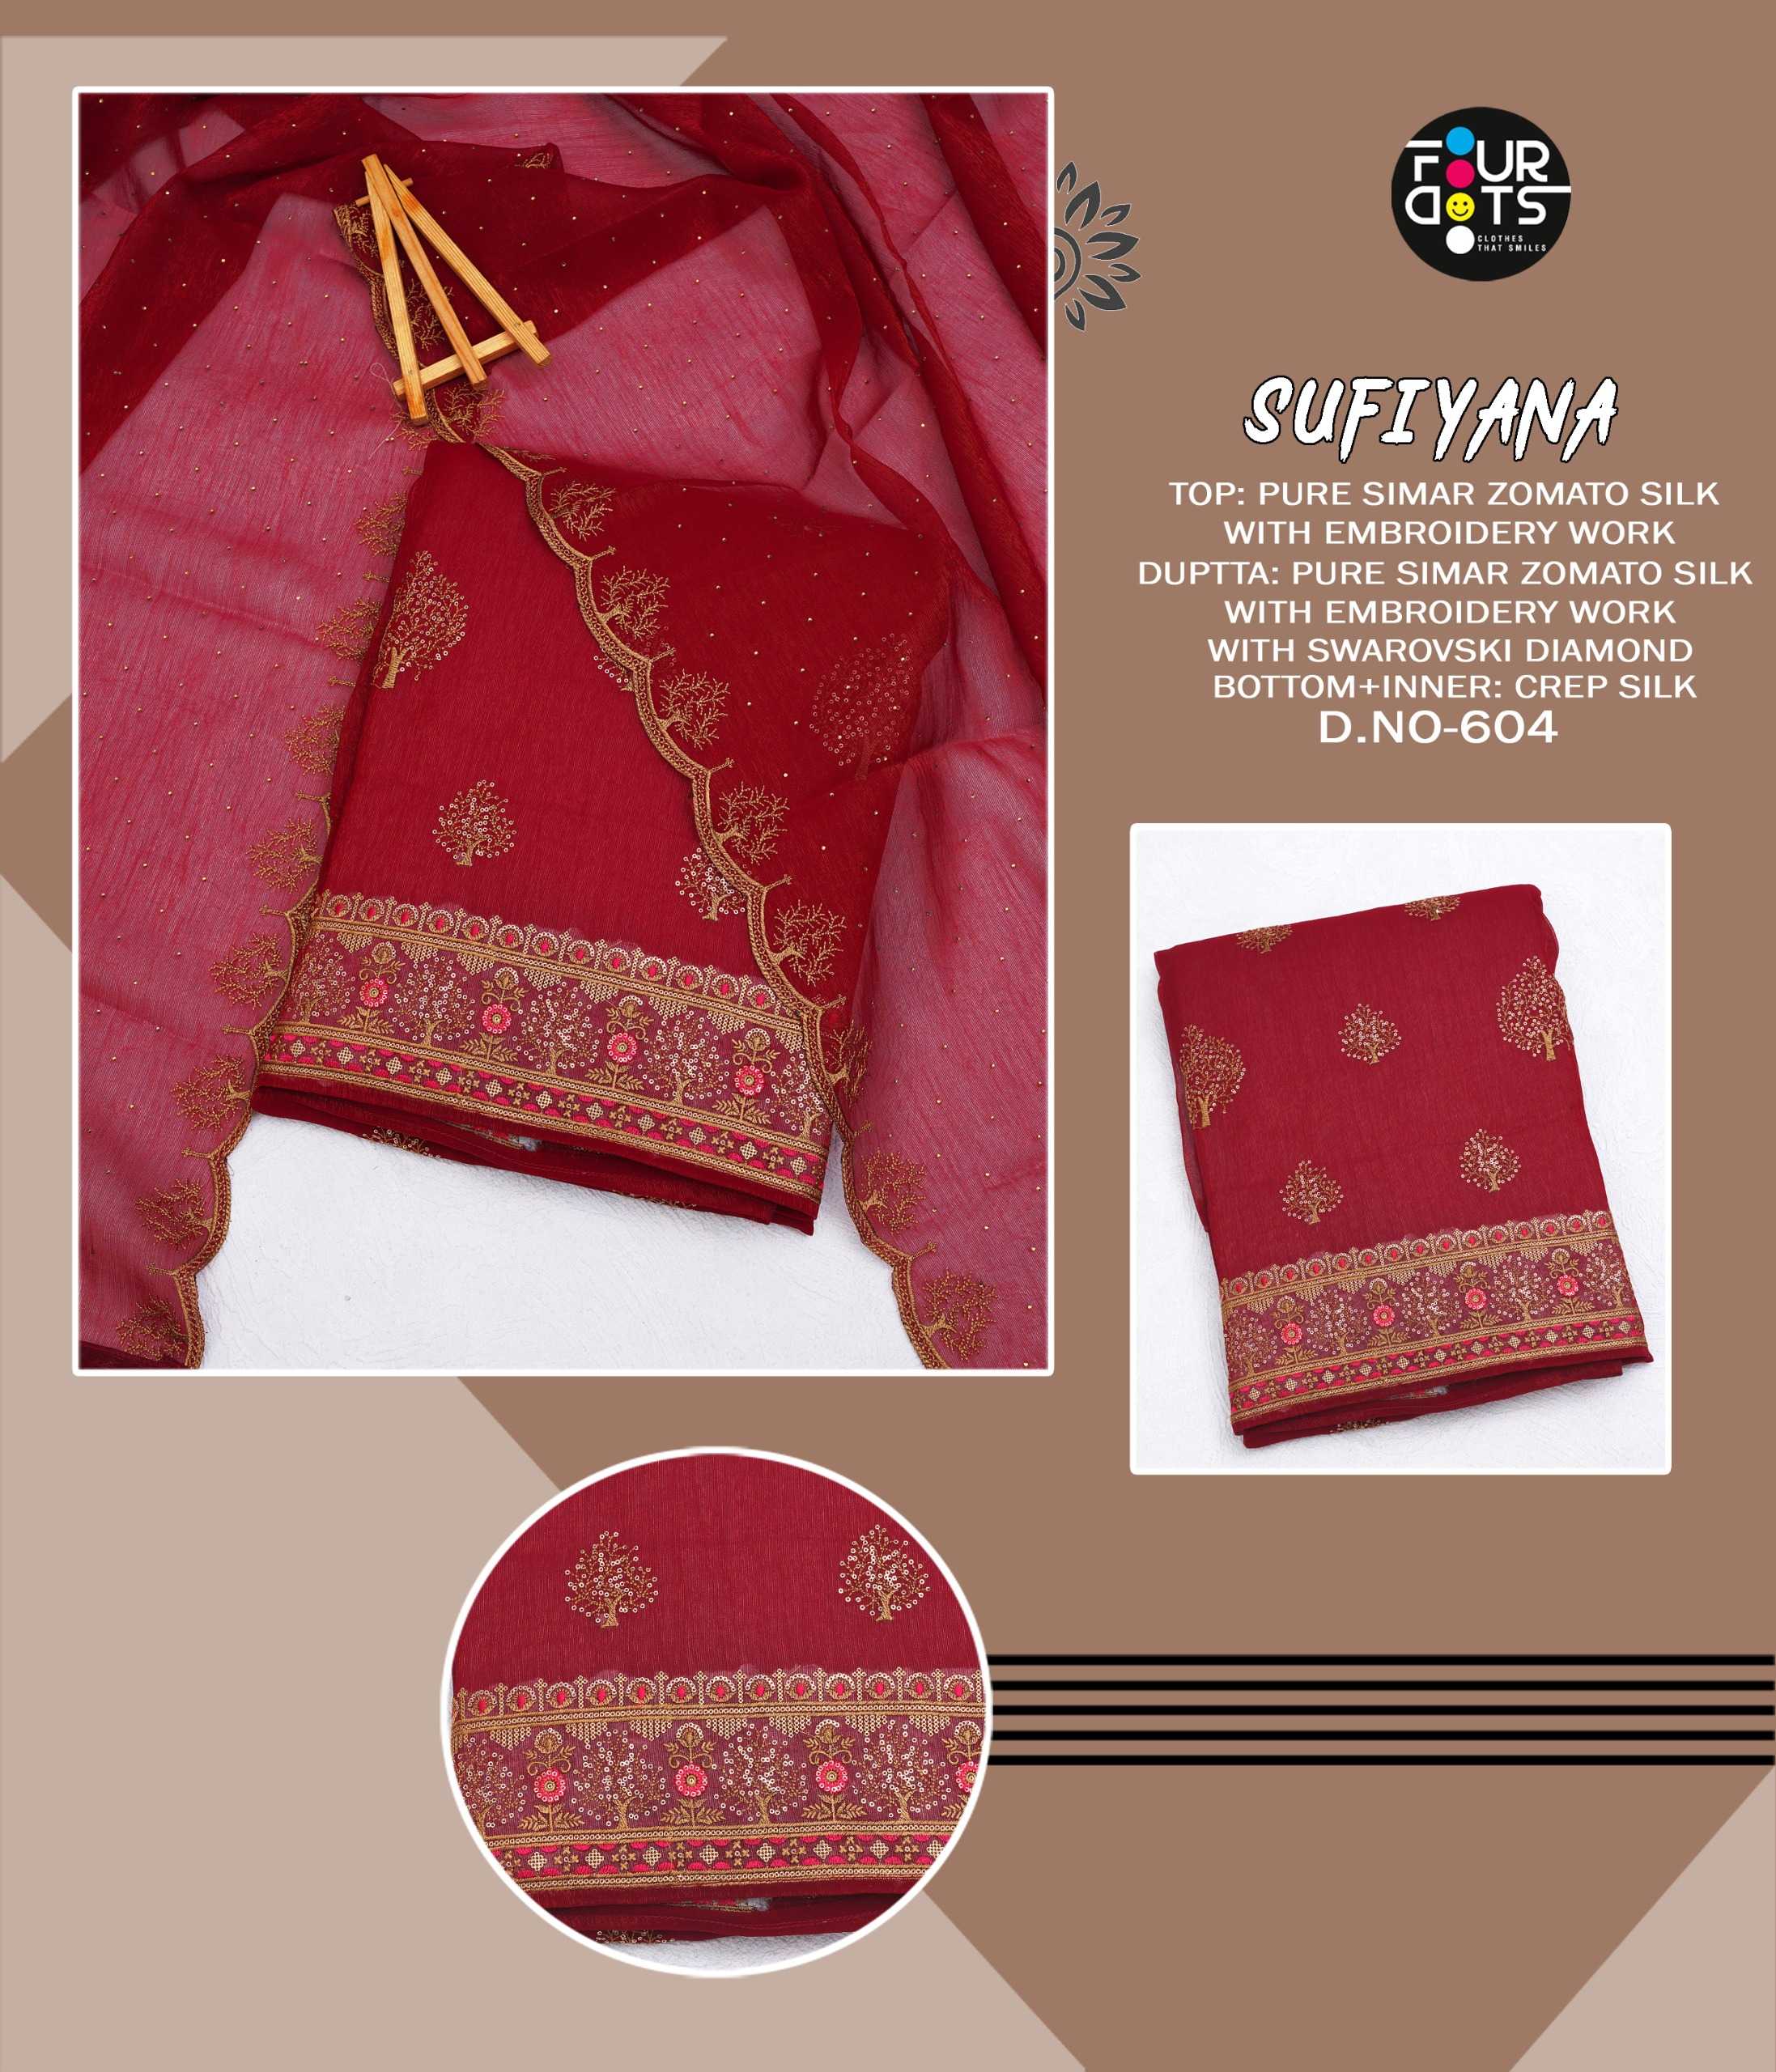 fourdots sufiyana beautiful zomato silk with embroidery work dress material 